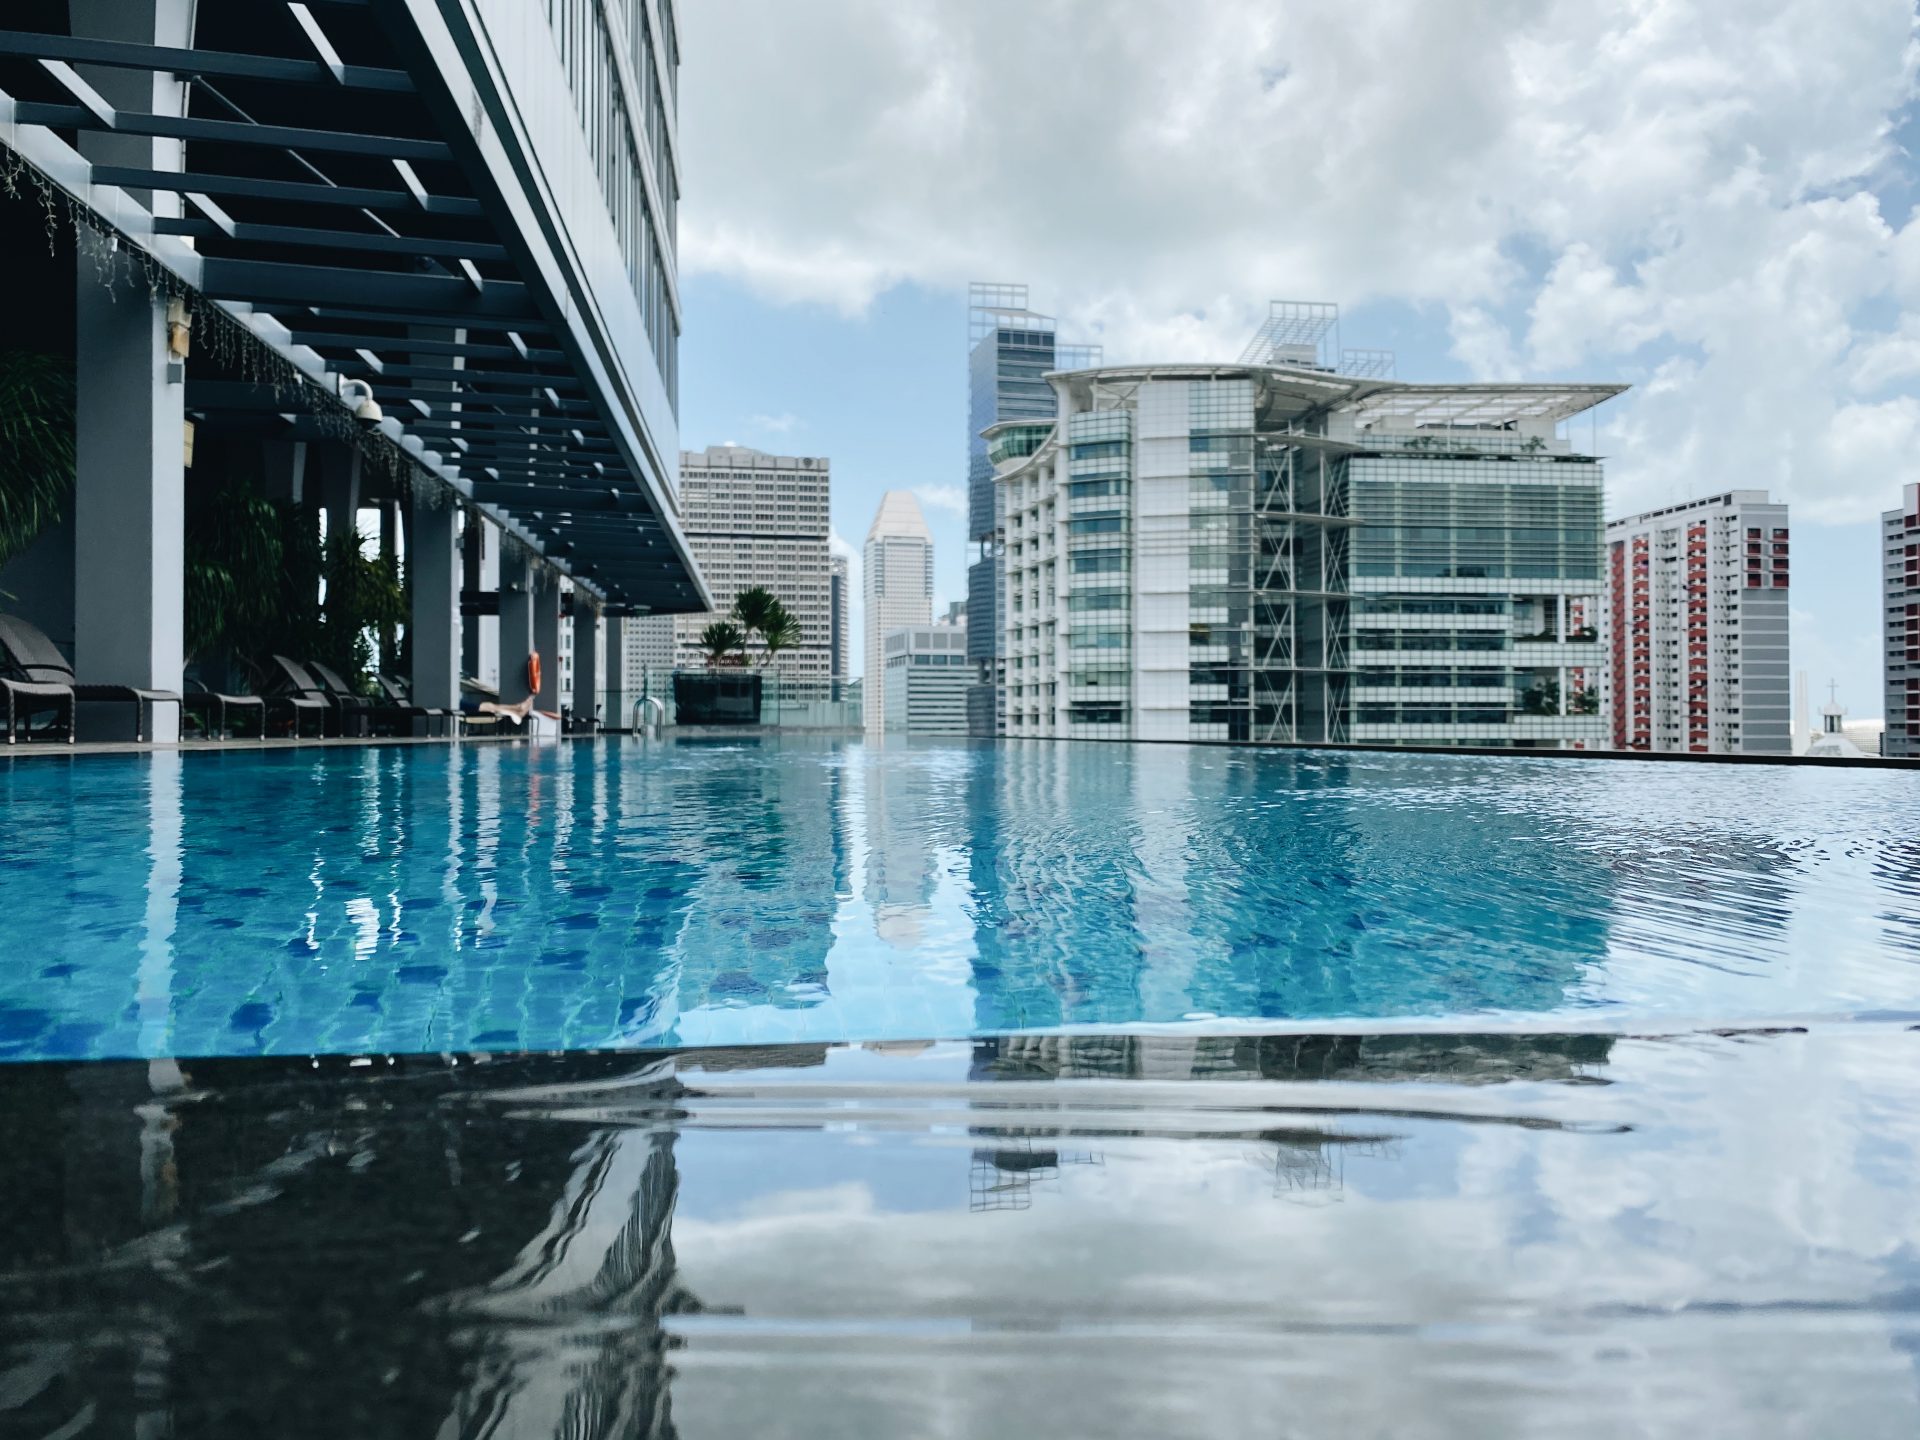 Hotel Spy - The Mercure Hotel Bugis in Singapore - The Happy Urbanist